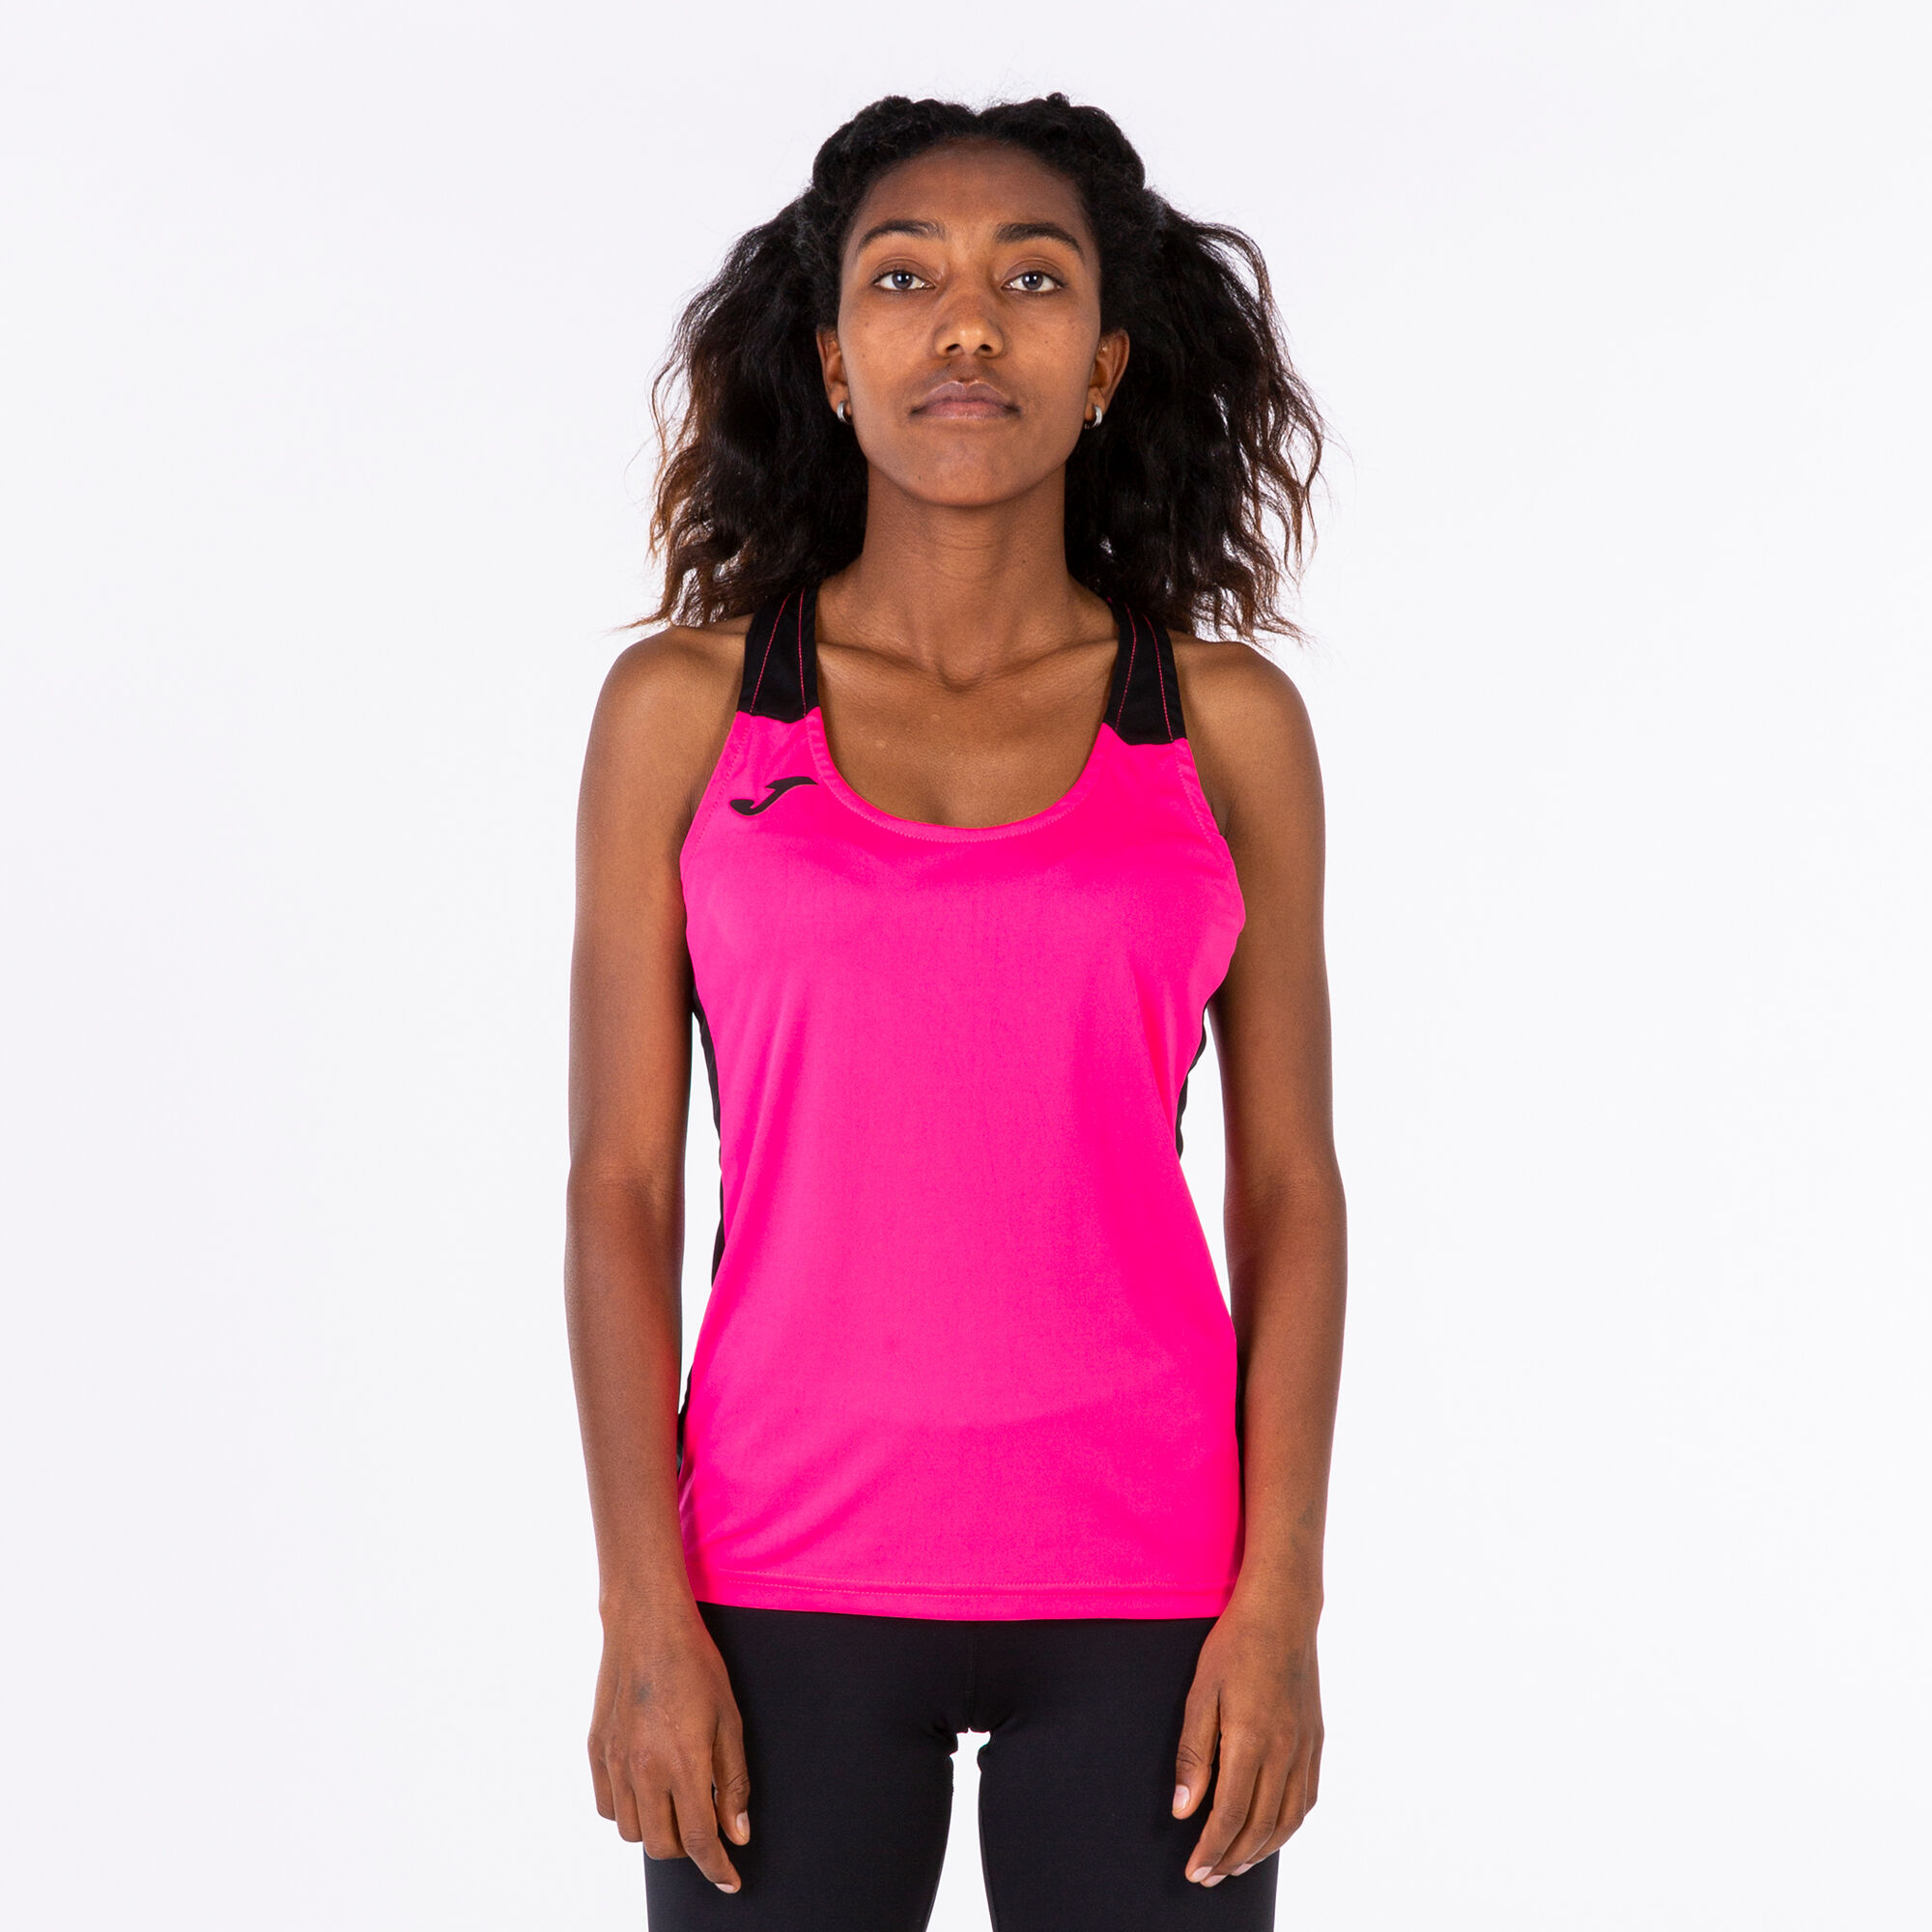 T-shirt de alça mulher Record II rosa fluorescente preto